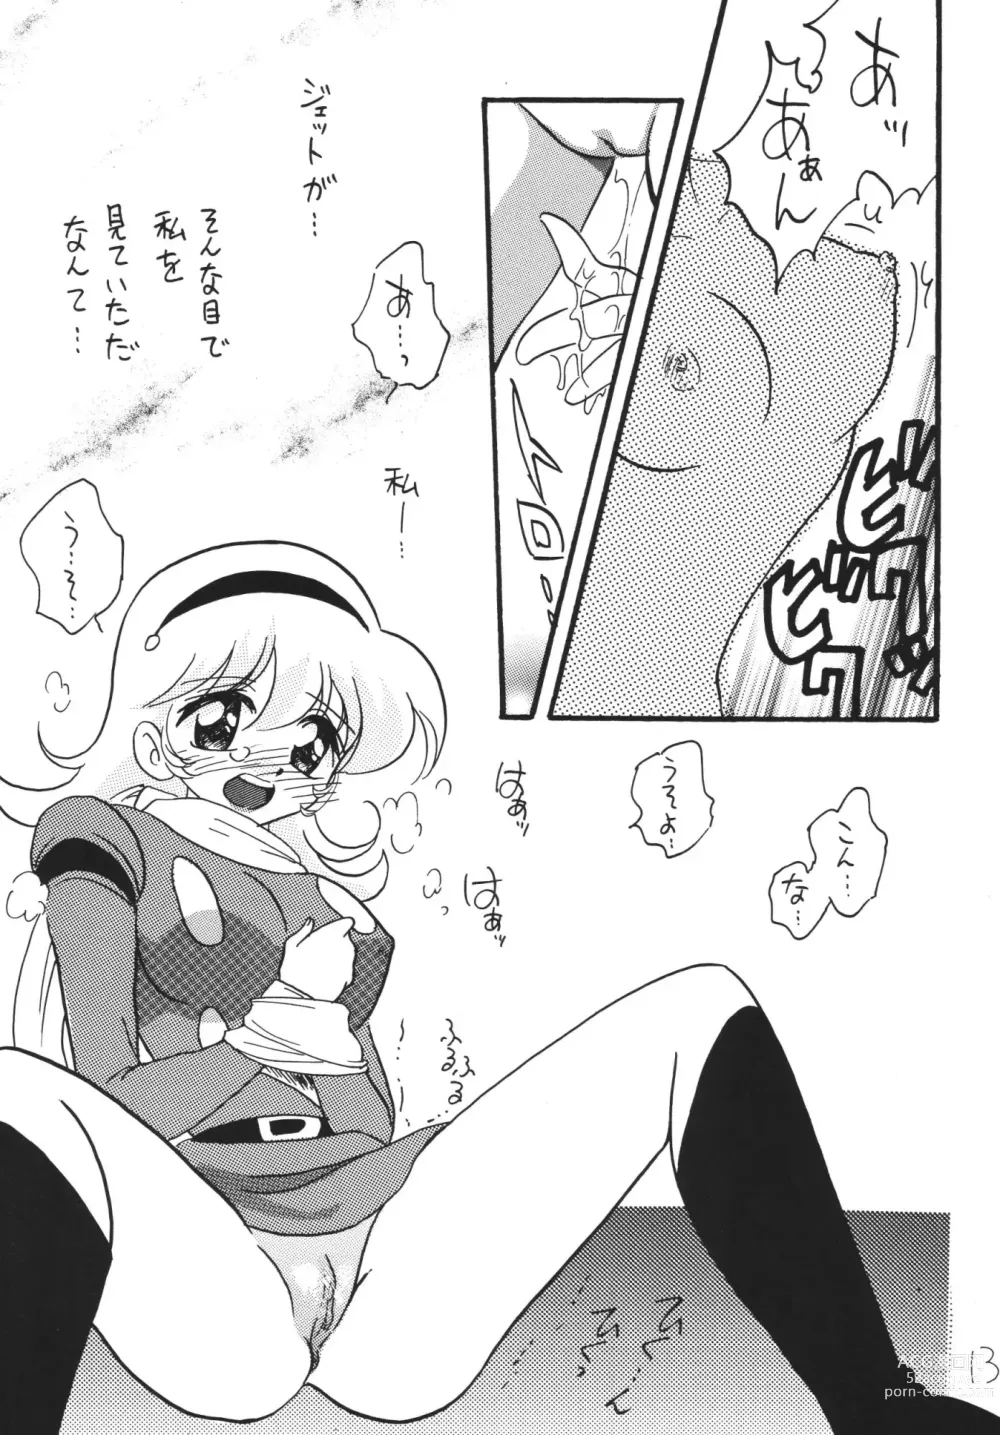 Page 13 of doujinshi Jet Kiryuu no Komoriuta - Jet Stream Lullaby